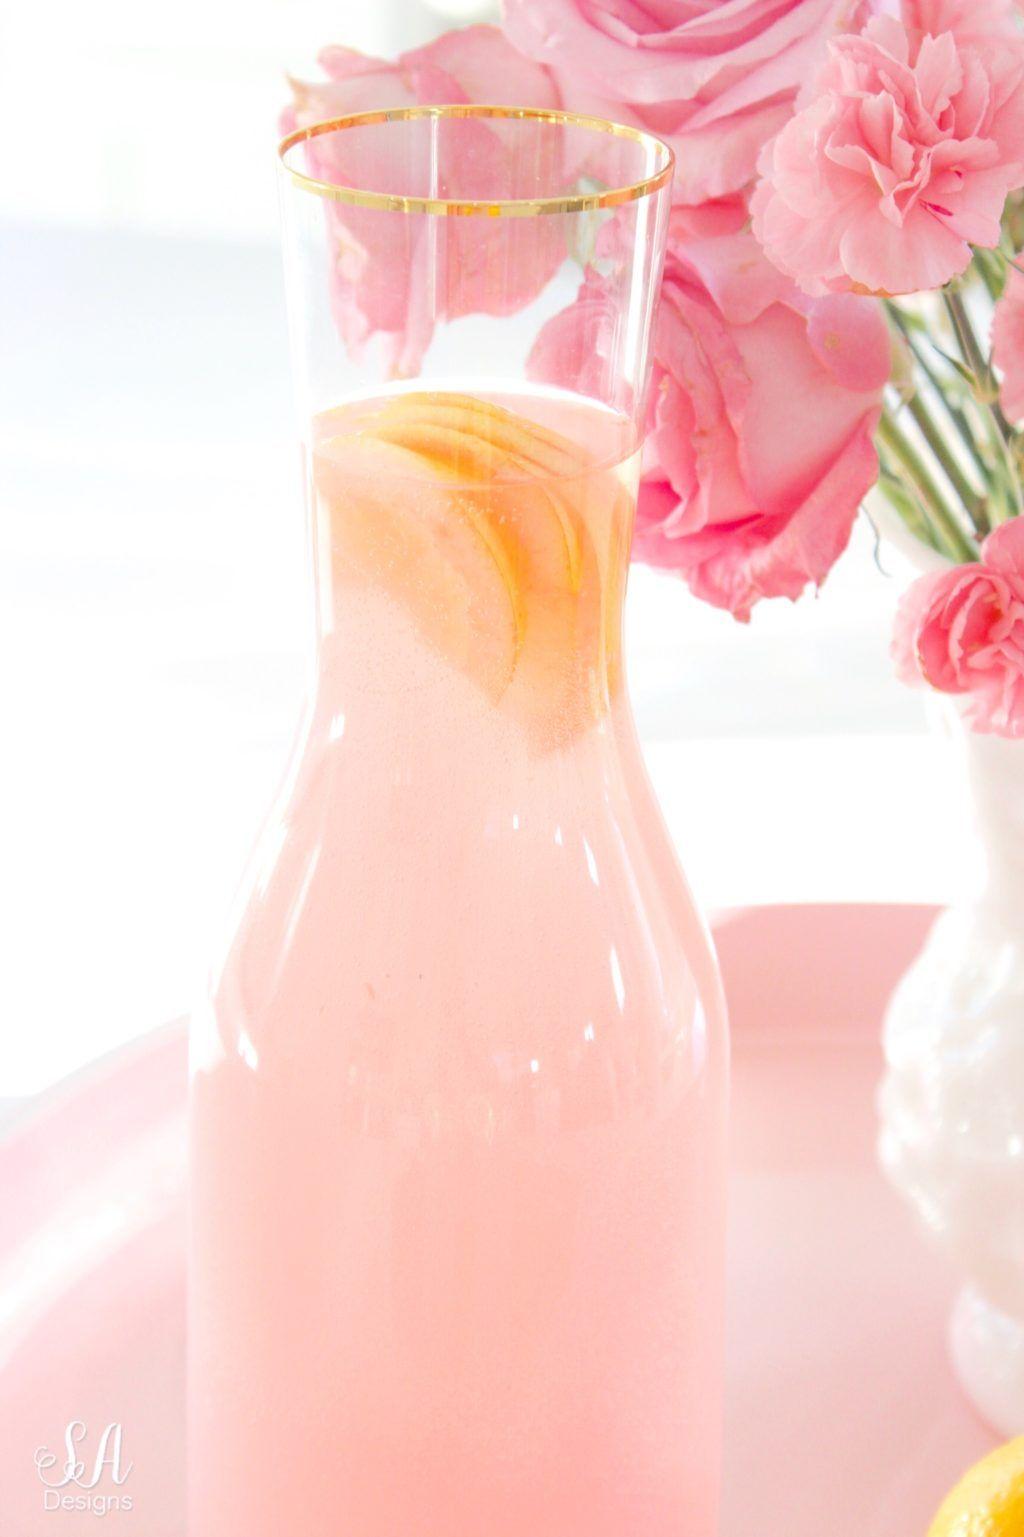 Pink Lemonade Wallpapers - Top Free Pink Lemonade Backgrounds